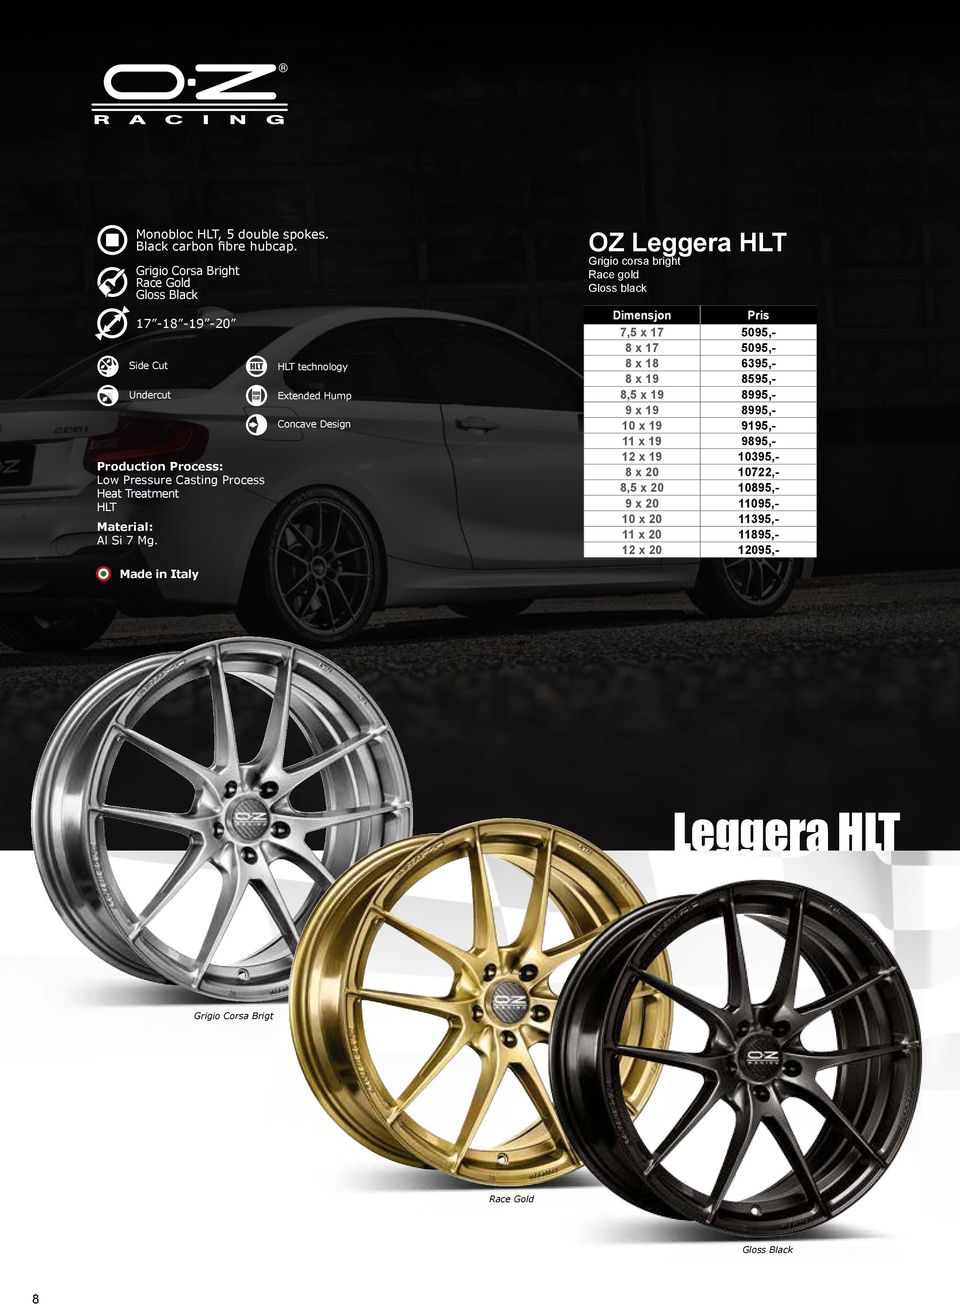 7 Mg. HLT technology Extended Hump Concave Design OZ Leggera HLT Grigio corsa bright Race gold Gloss black Dimensjon 7,5 x 17 5095,- 8 x 17 5095,- 8 x 18